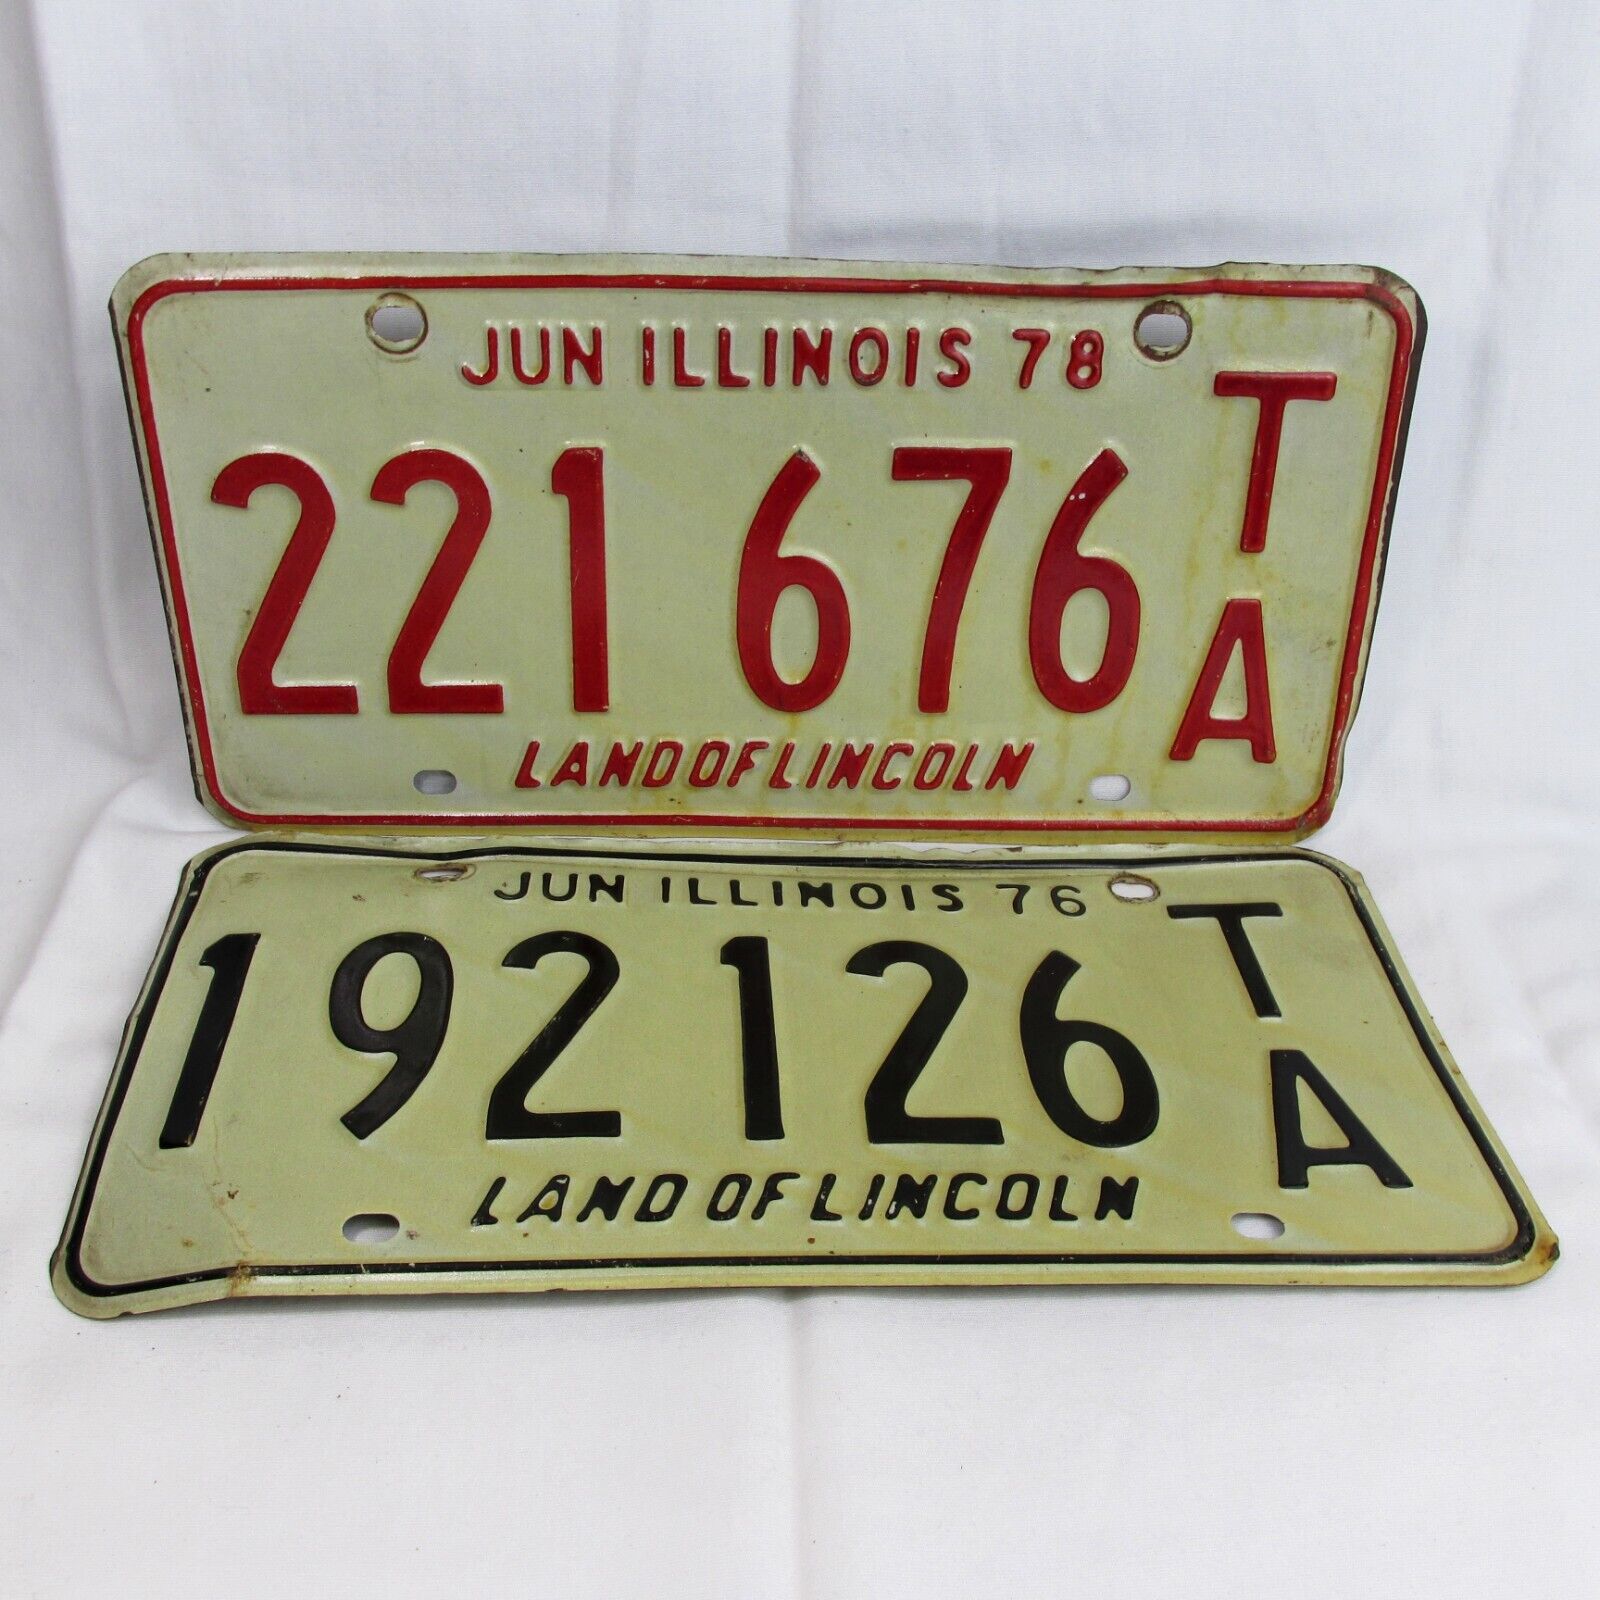 Vintage Trailer Illinois 1976 & 1978 License Plates 192 126 TA & 221 676 TA